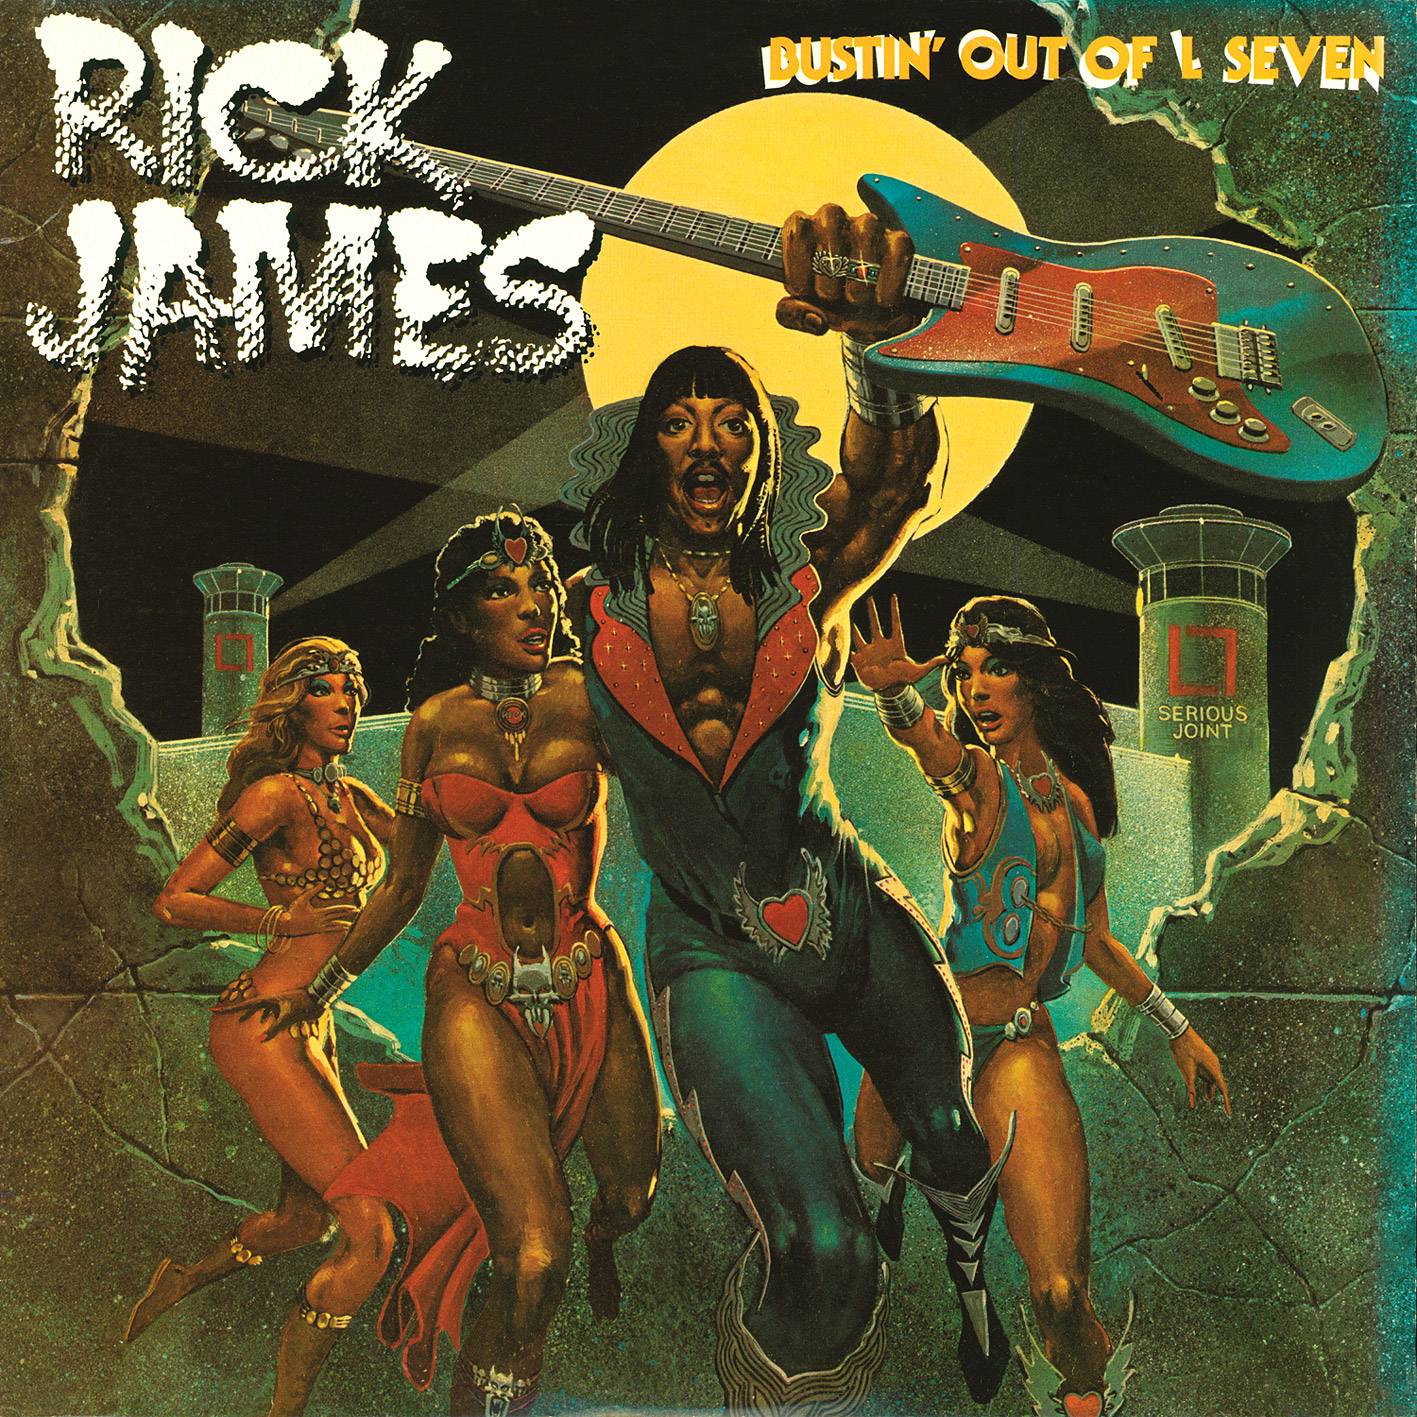 Rick James - Bustin' Out Of L Seven (1979/2016) [HDTracks FLAC 24-bit/192kHz]